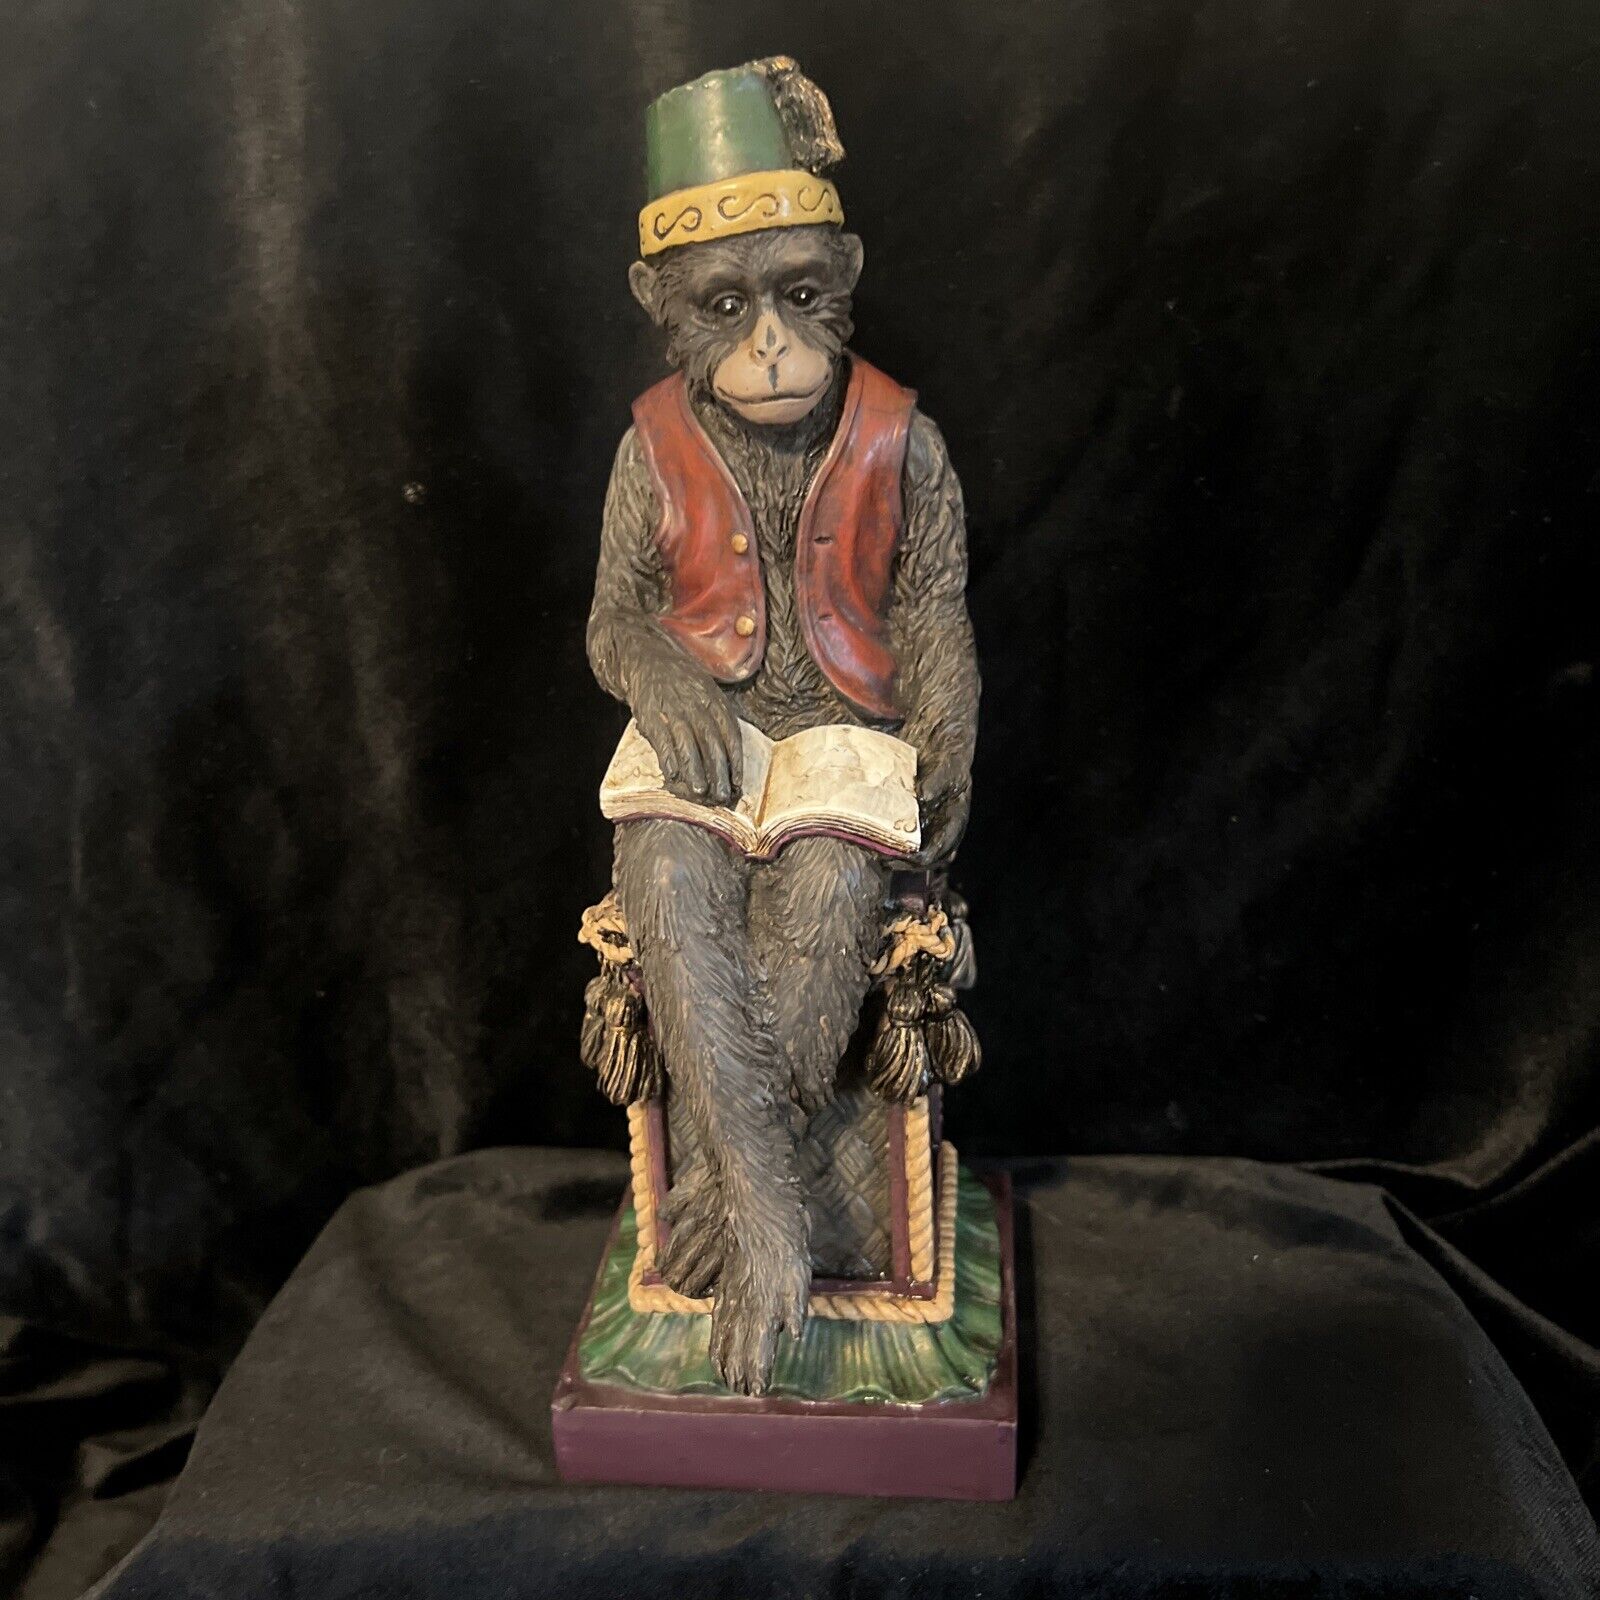 Monkey Cast Statuette Figure READING BOOK 2001 CBK, LTD India Bombay Fez Hat